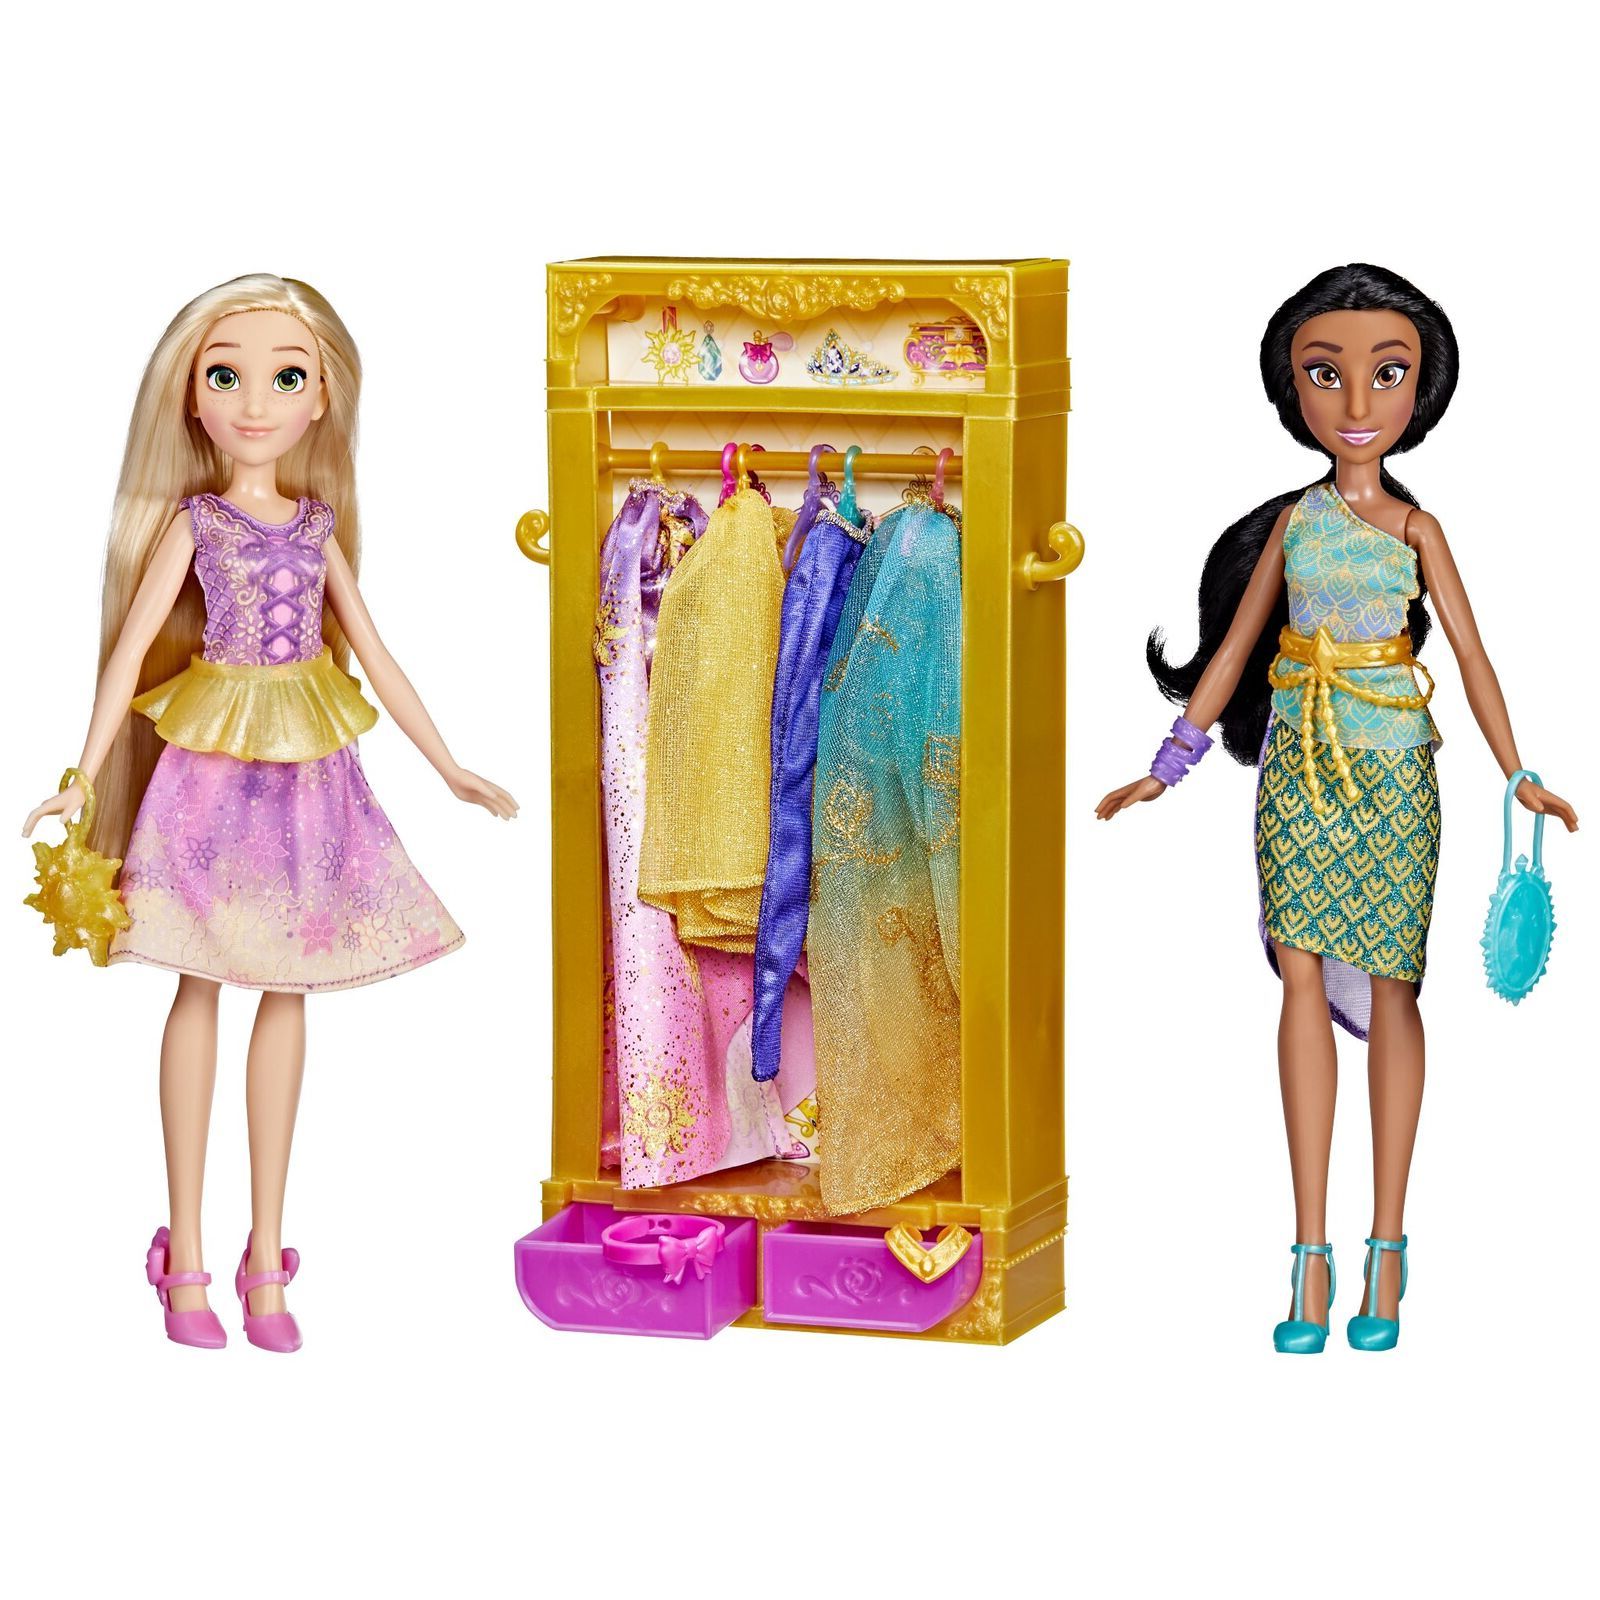 Disney Princess Life Ultimate Fashion Wardrobe At Toys R Us For The Princess Wardrobes (Gallery 12 of 20)